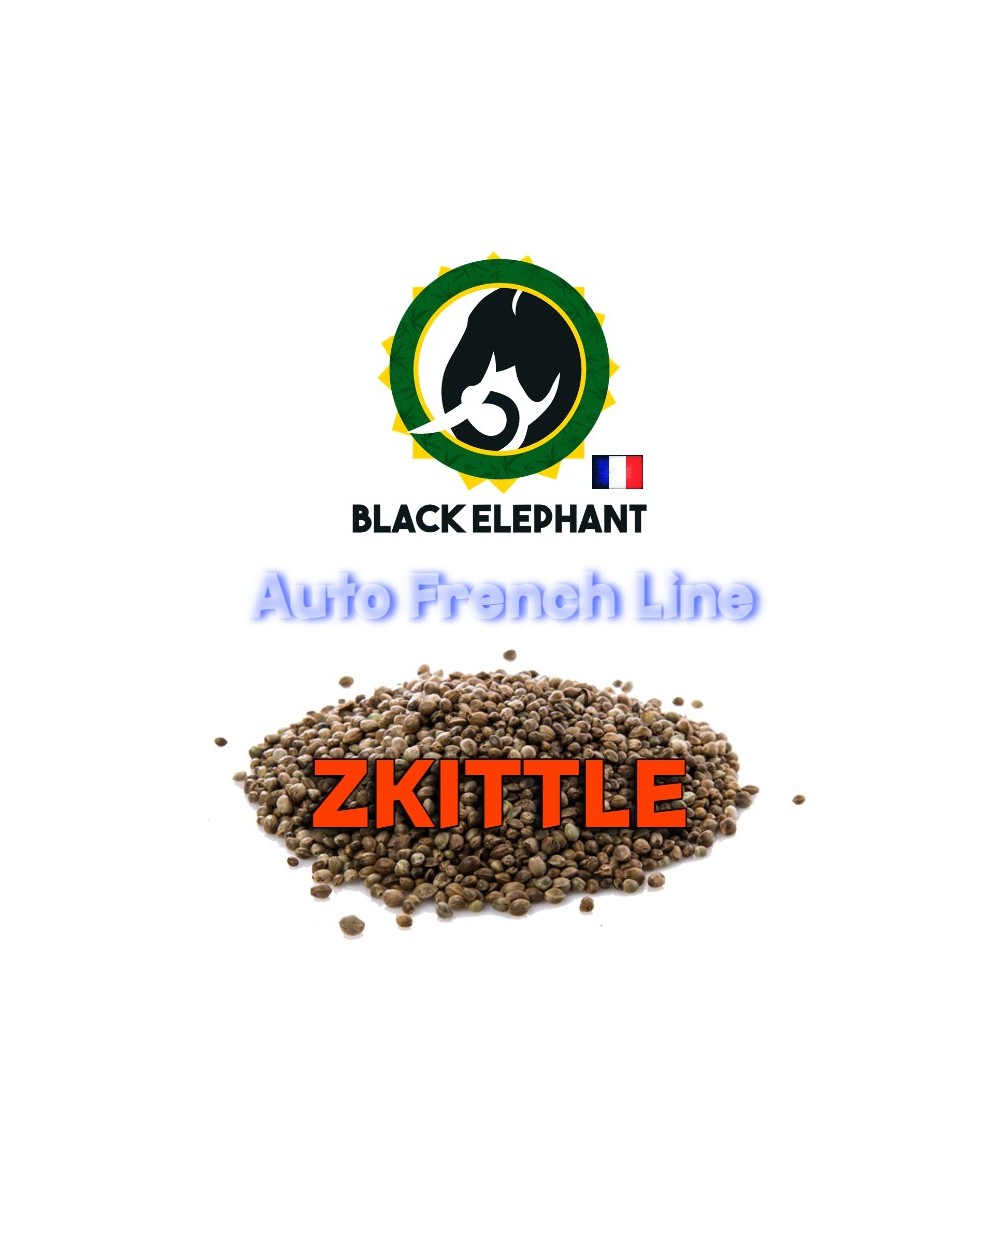 ZKITTLE AUTO - BLACK ELEPHANT - AUTO FRENCH LINE